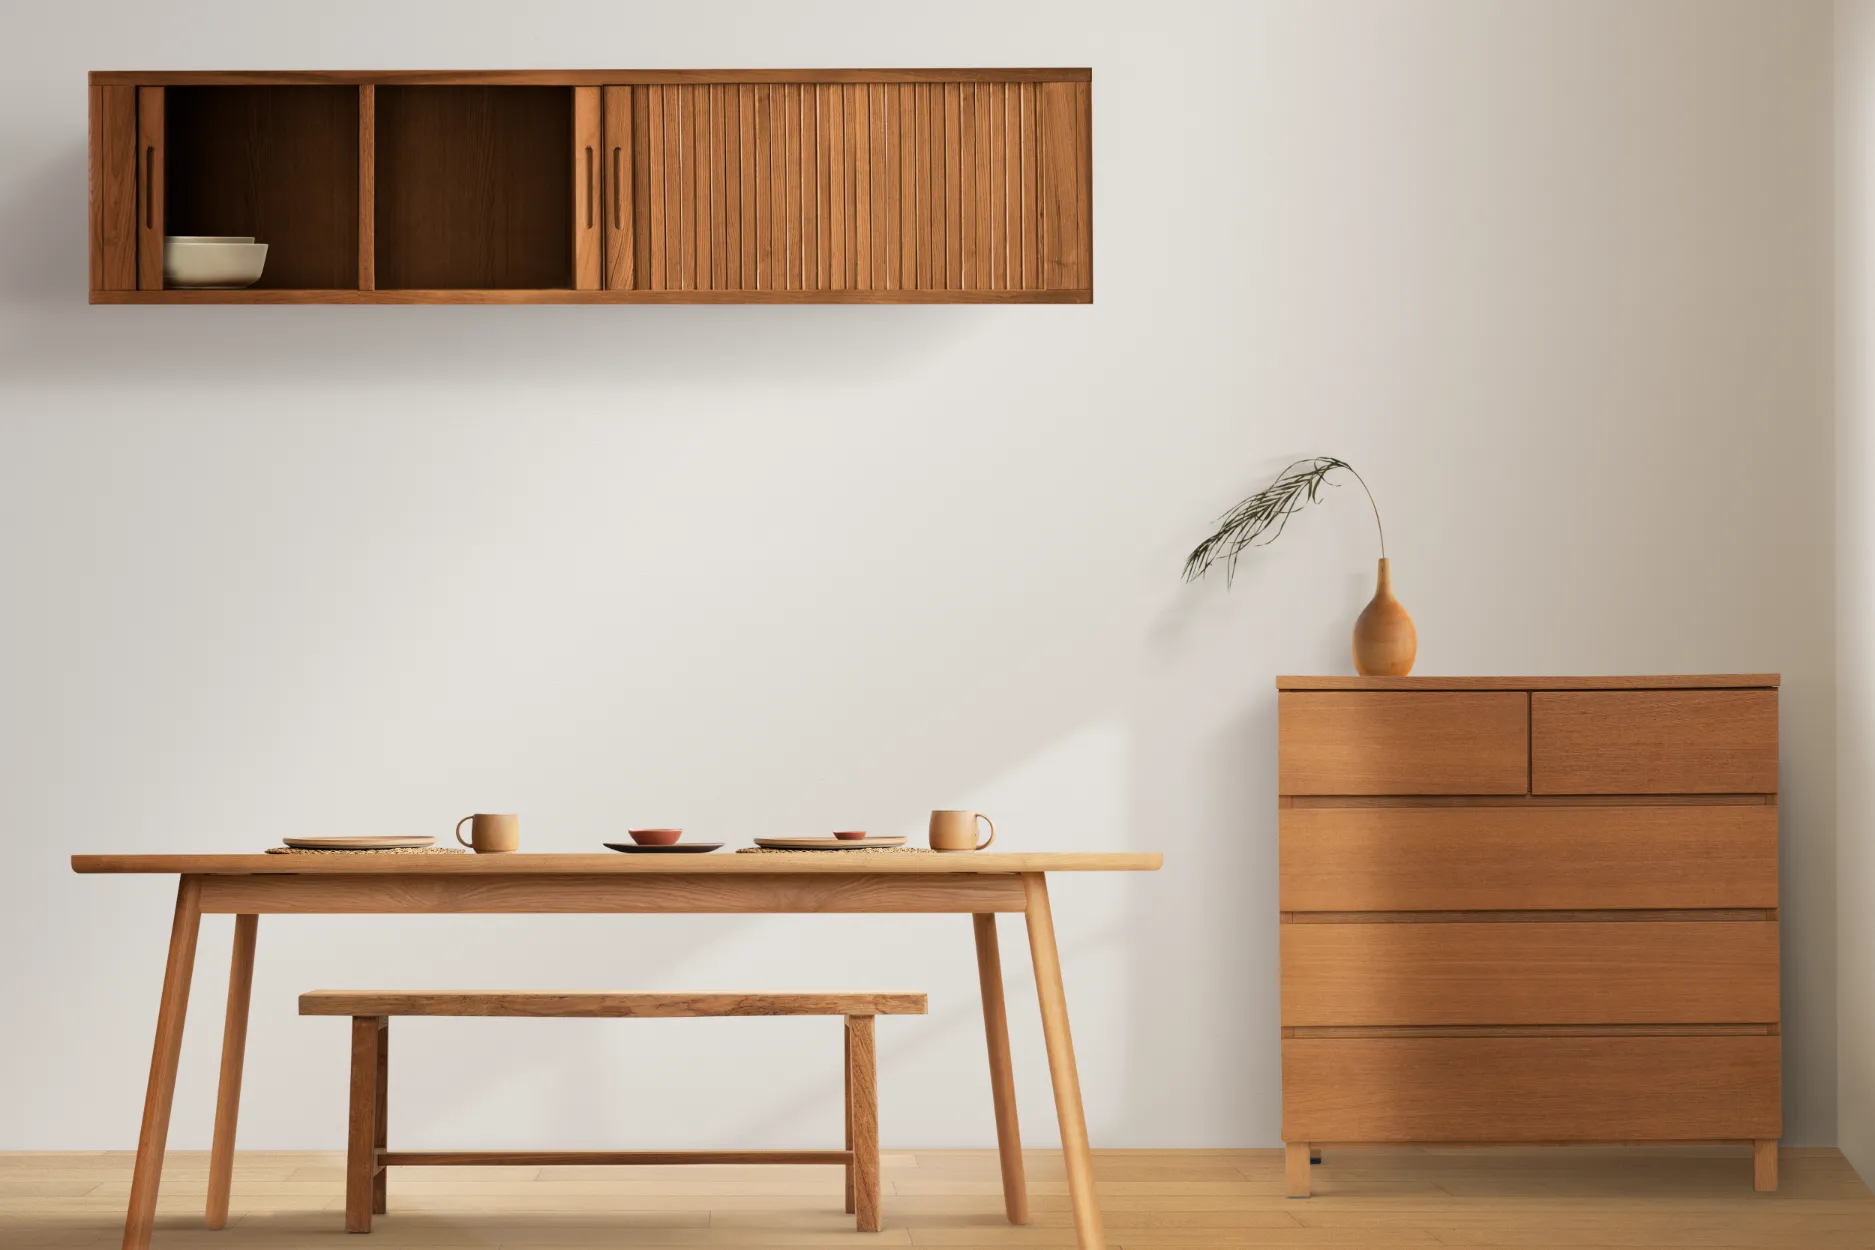 Wooden Furniture In Minimal Dining Room Interior D 2022 12 16 00 32 06 Utc.webp